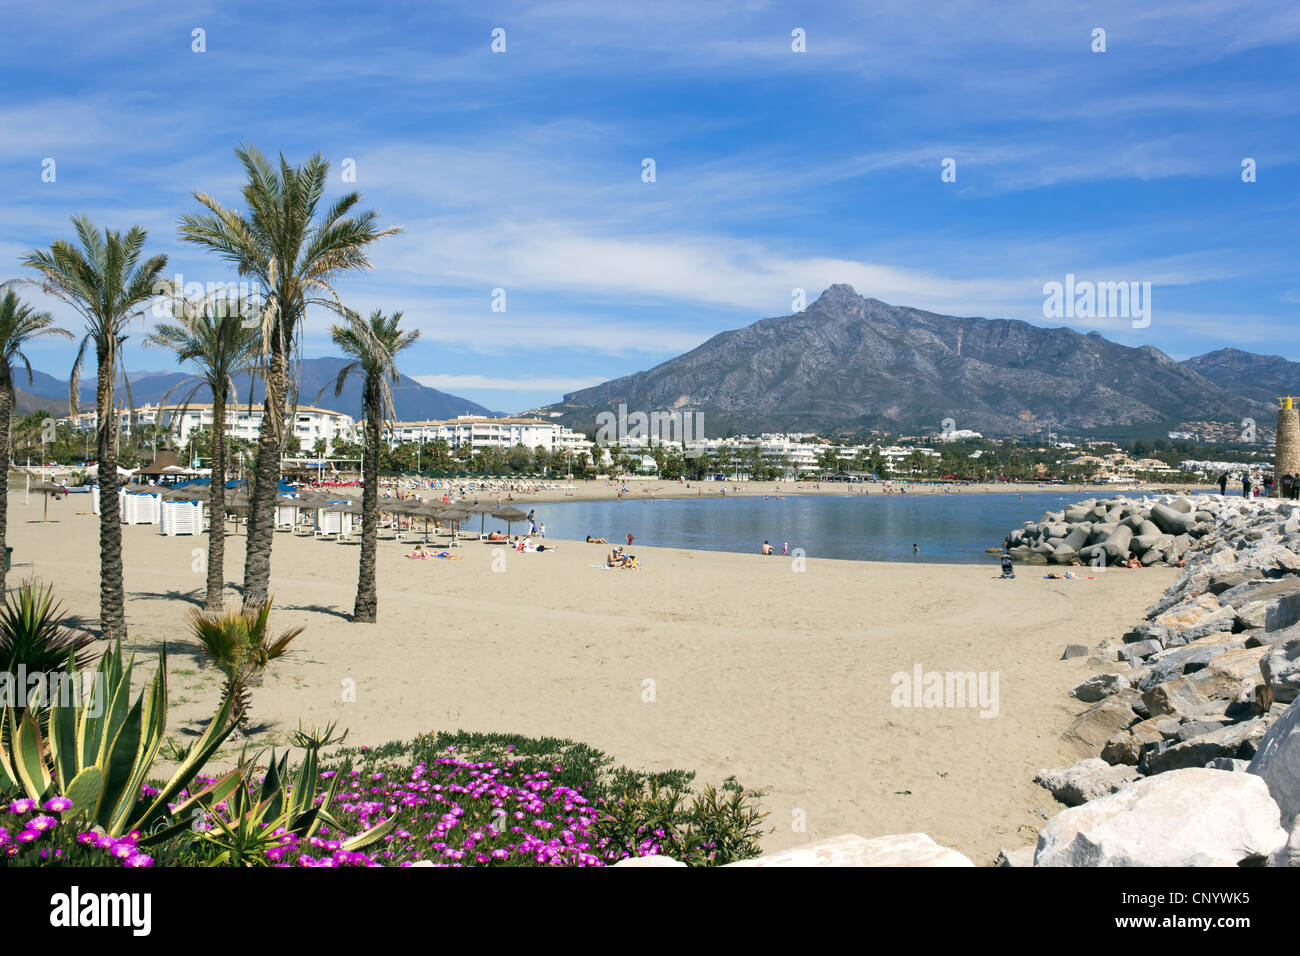 Puerto Banus, Marbella, Costa del Sol, Andalucia, Spain. View of the beach with La Concha mountain in the background. Stock Photo